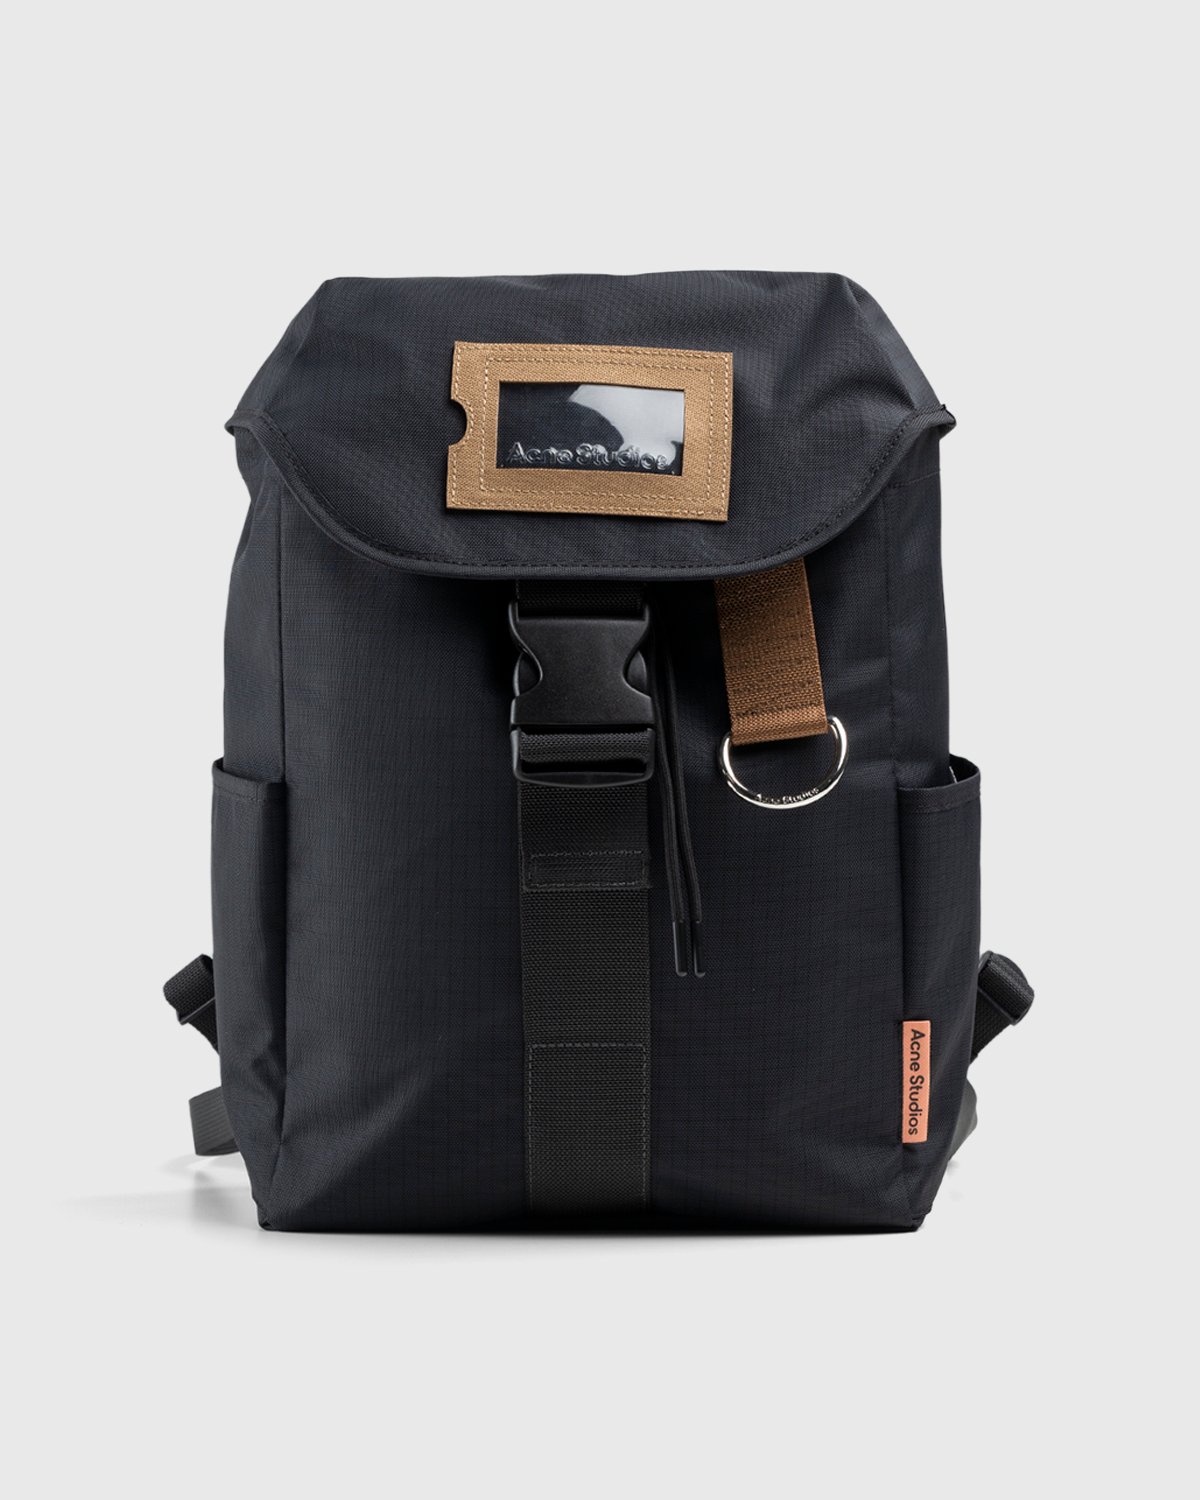 Acne Studios - Ripstop Nylon Backpack Black - Accessories - Black - Image 1